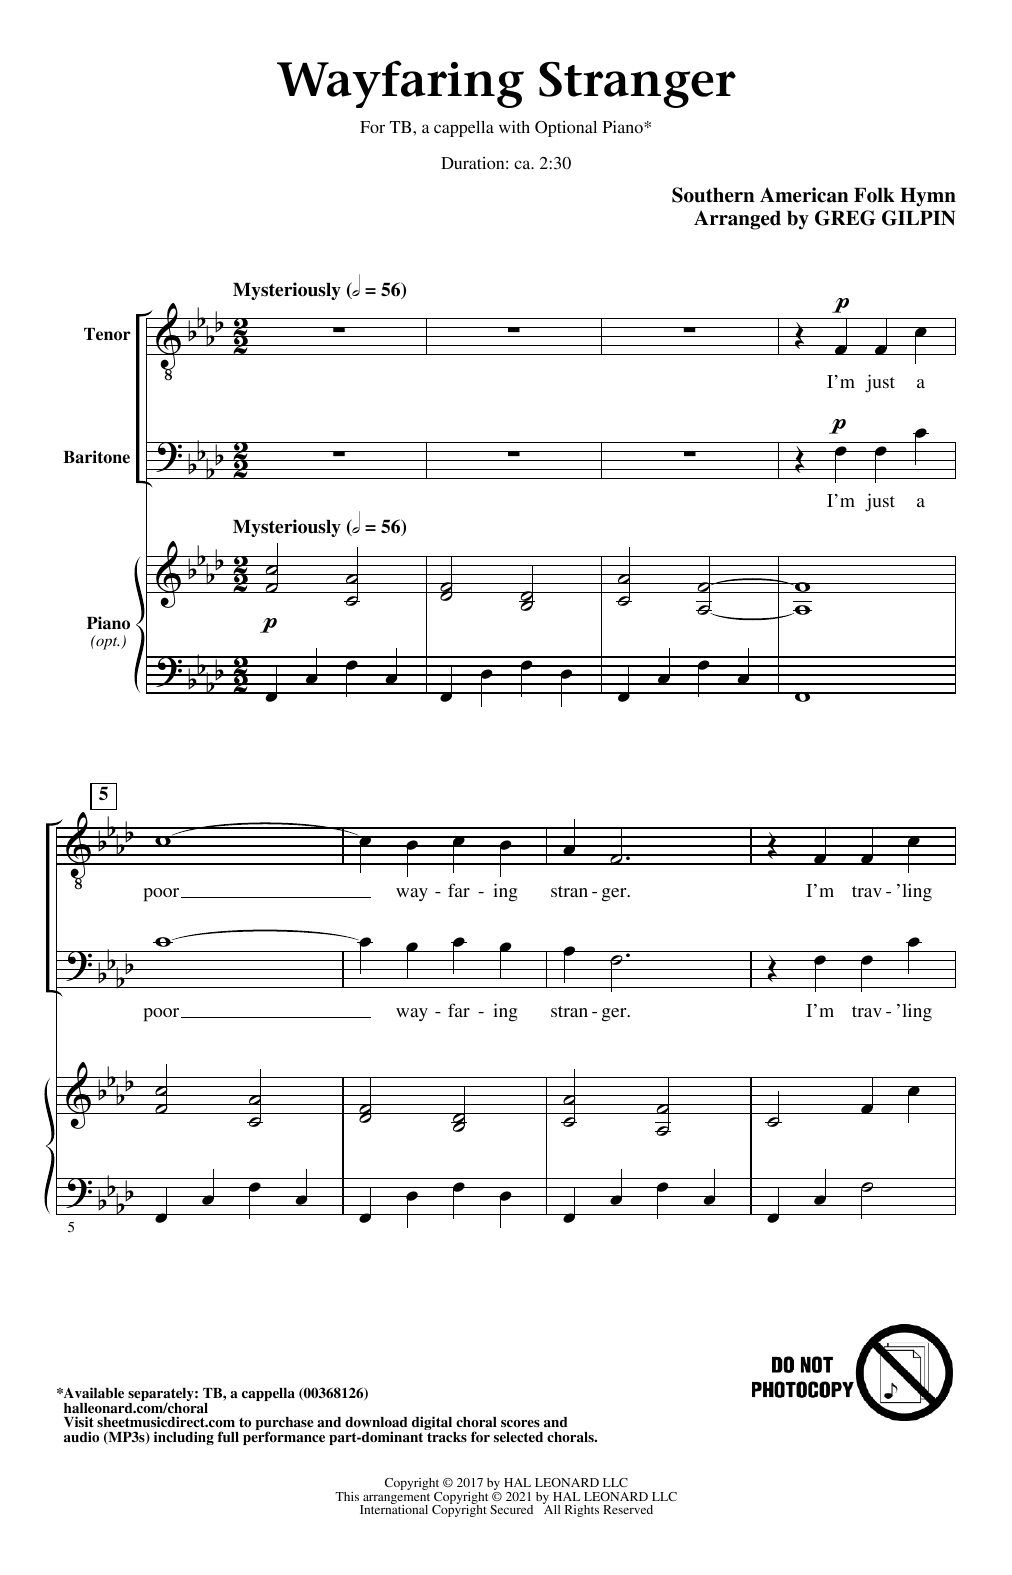 Southern American Folk Hymn Wayfaring Stranger (arr. Greg Gilpin) Sheet Music Notes & Chords for TB Choir - Download or Print PDF